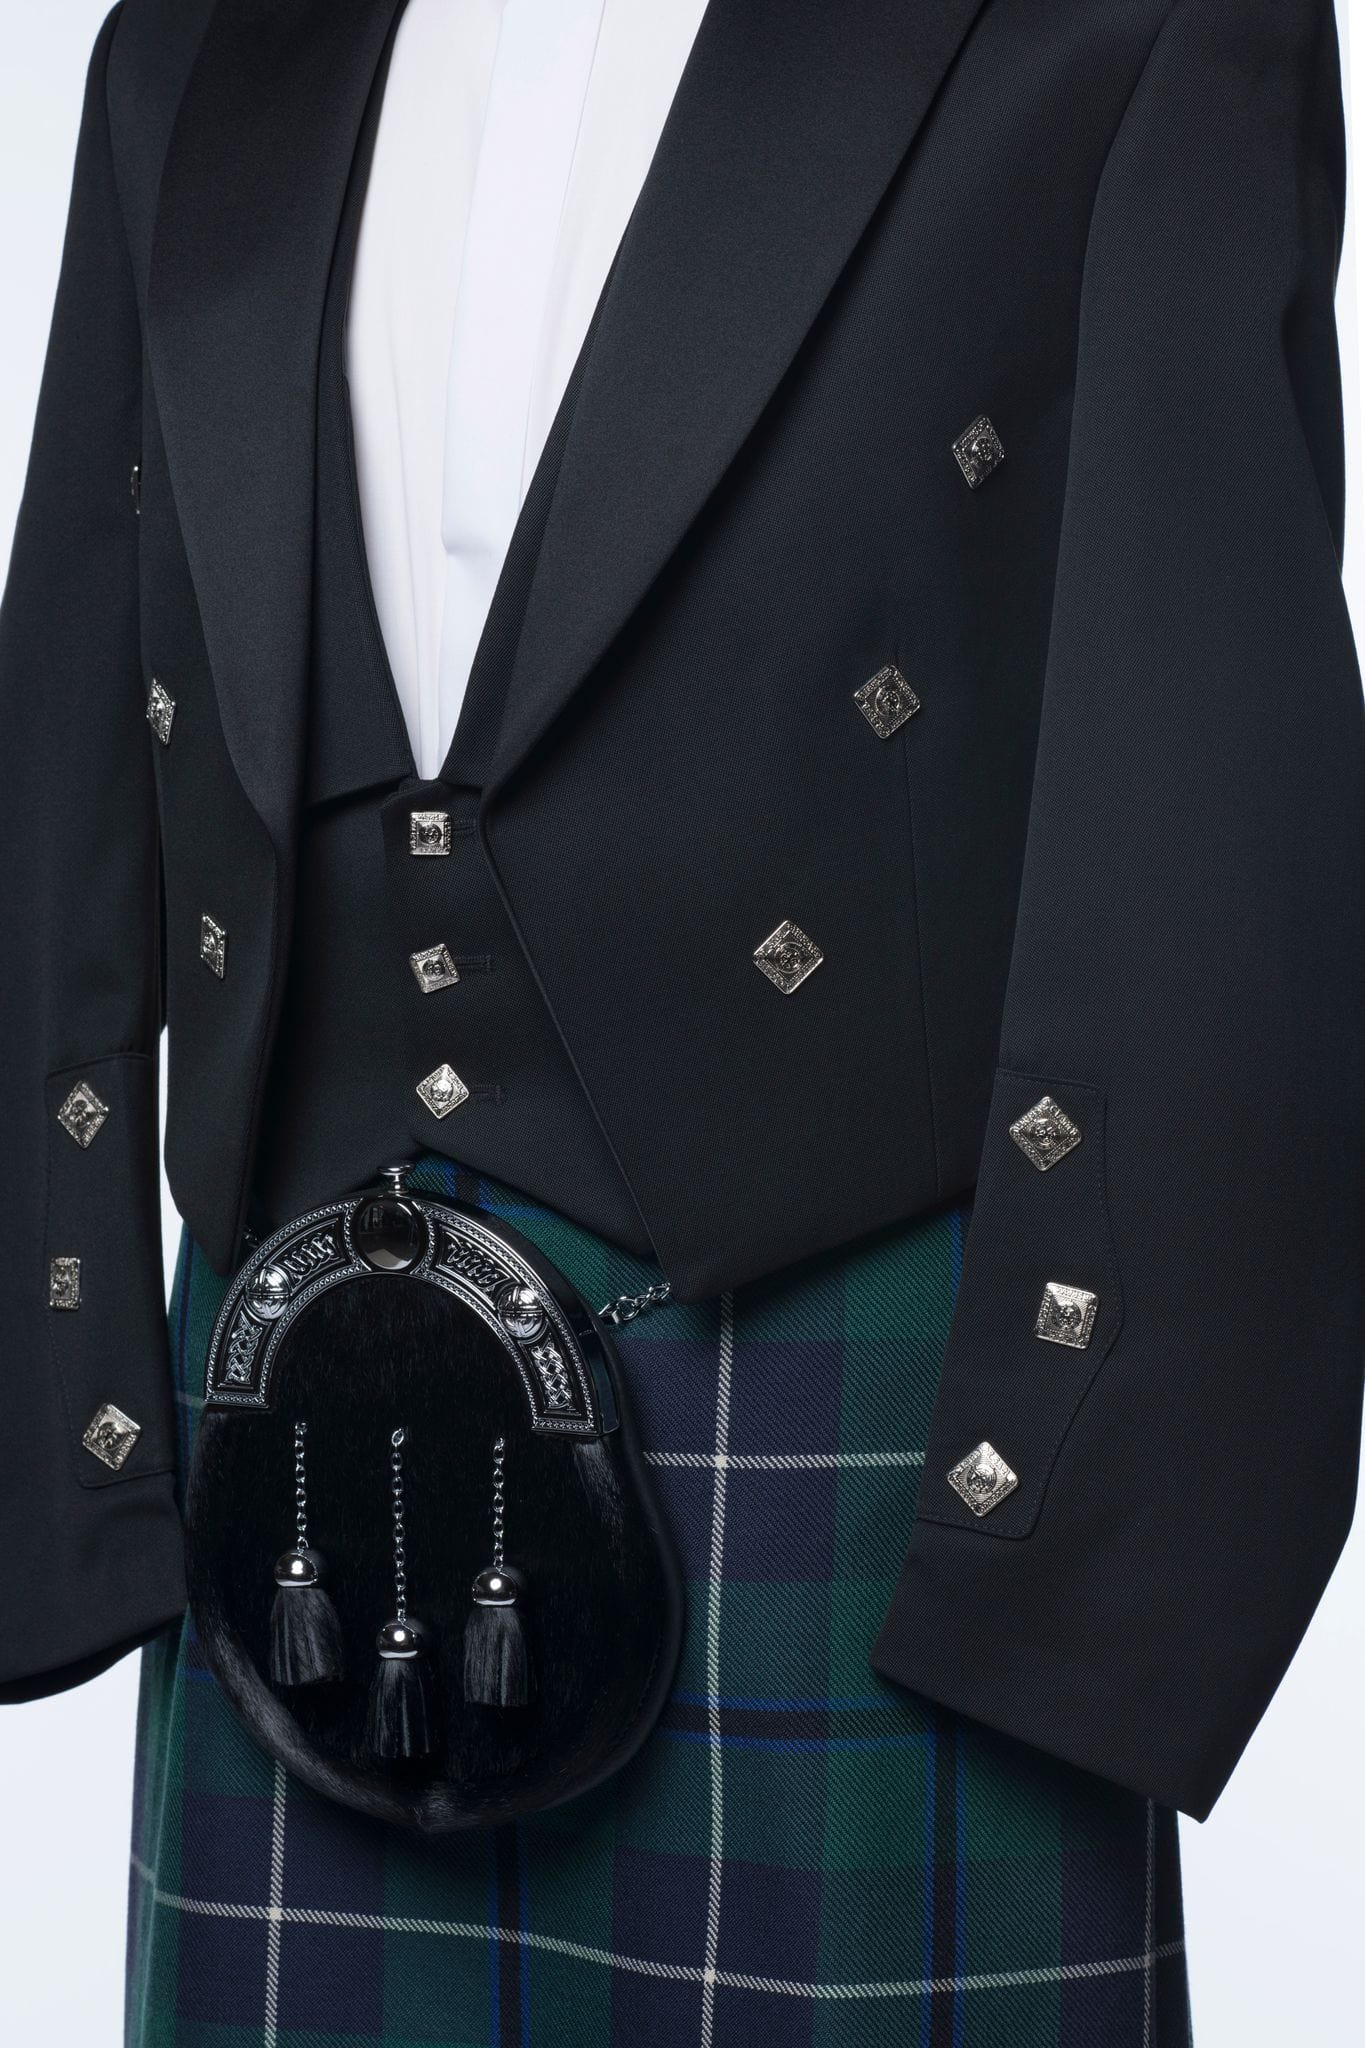 Budget Prince Charlie Kilt Jacket and Vest - MacGregor and MacDuff